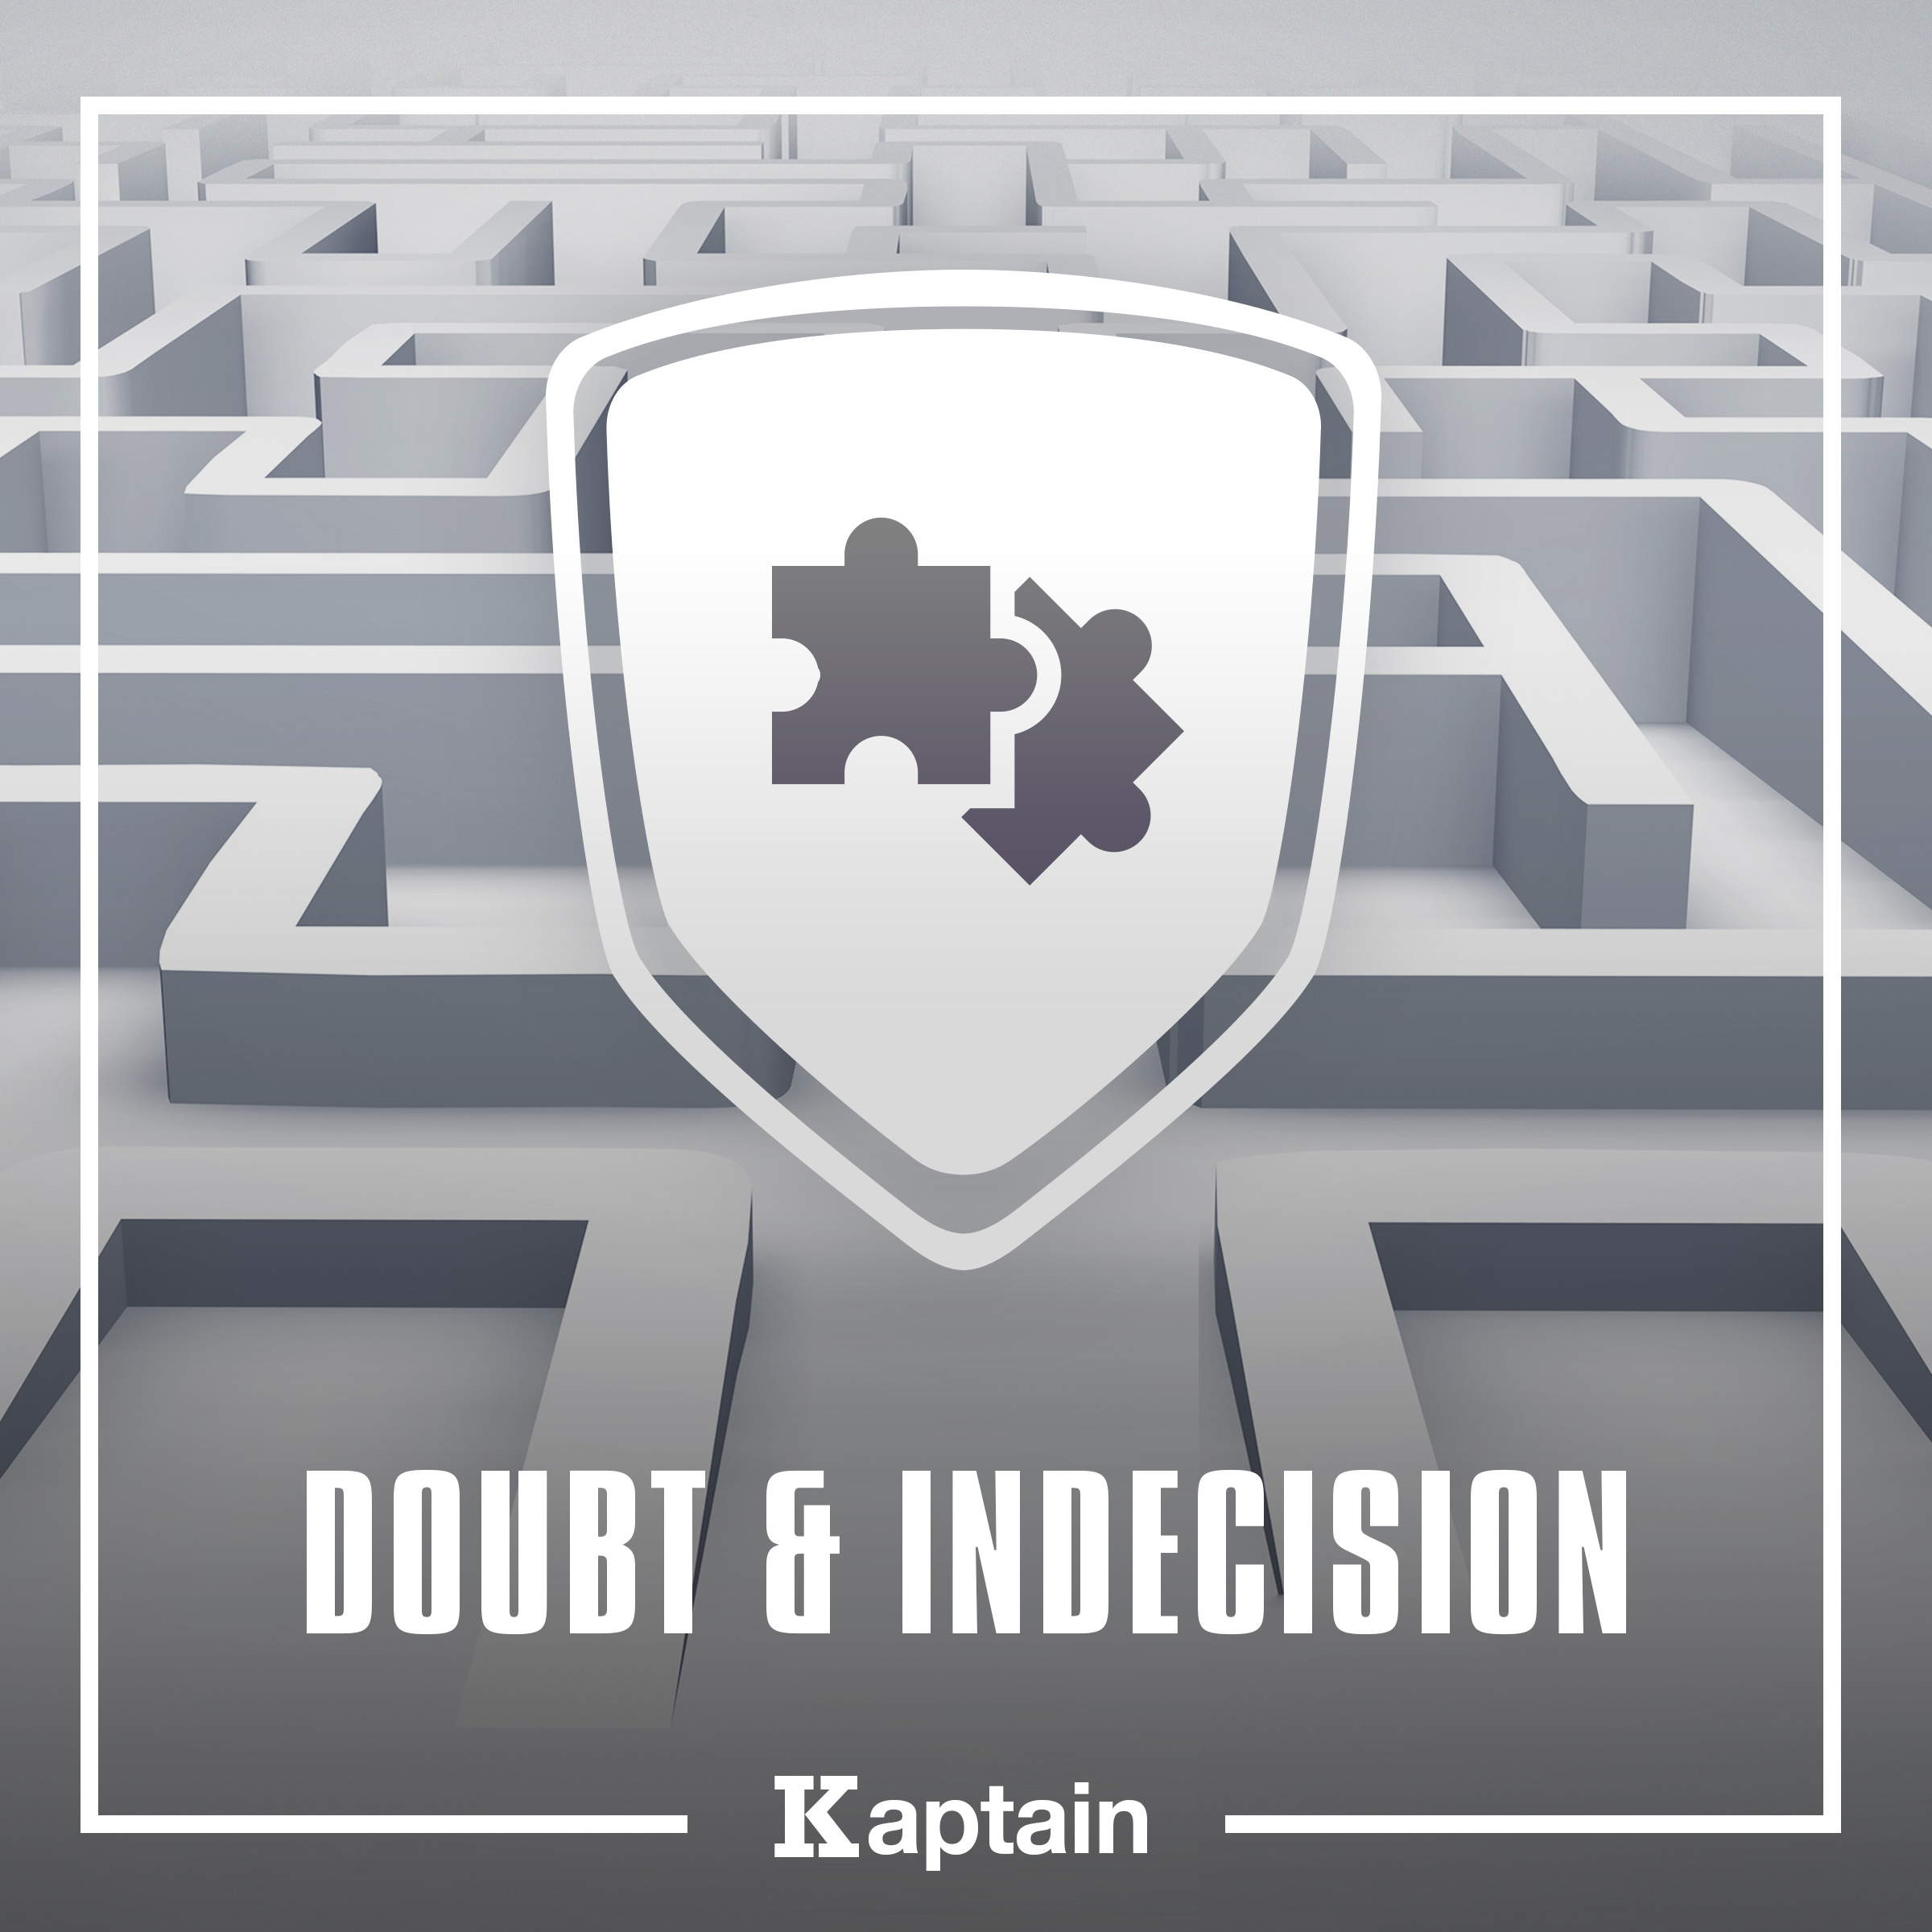 Doubt & Indecision